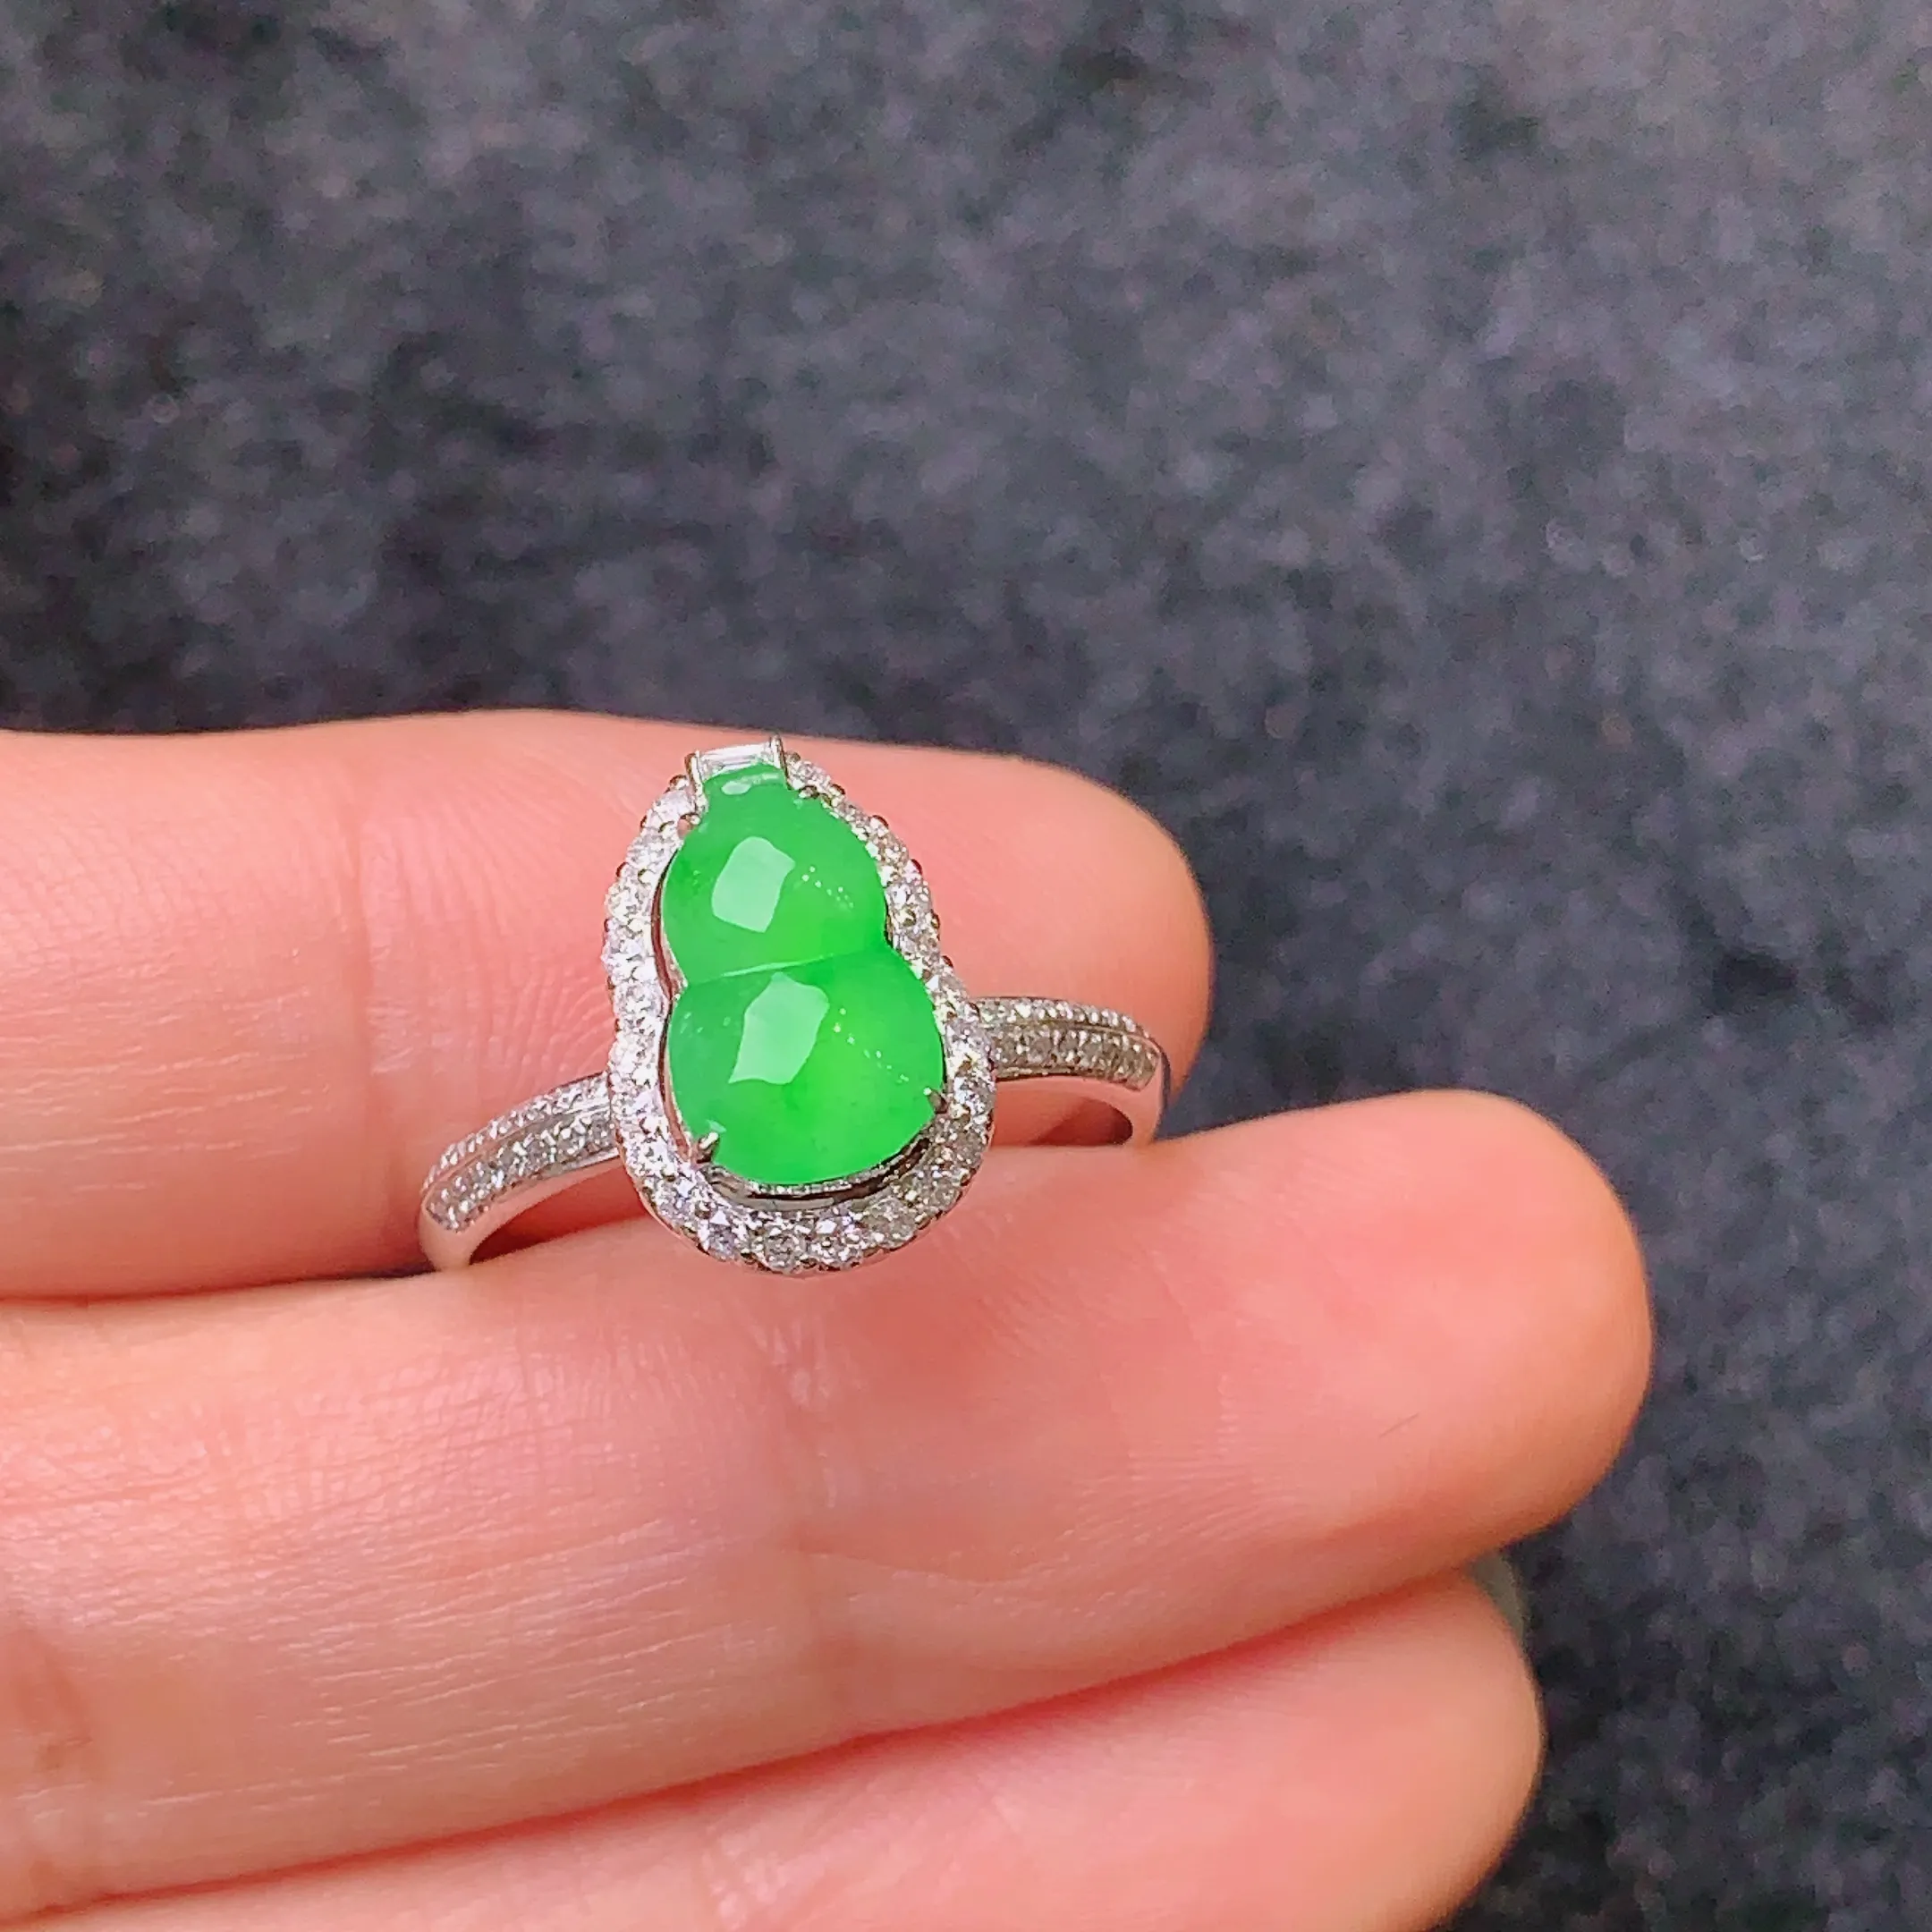 18k金钻镶嵌满绿葫芦戒指 玉质细腻 款式新颖时尚高贵优雅 圈口13.5整体尺寸12.7*8.9*8.8